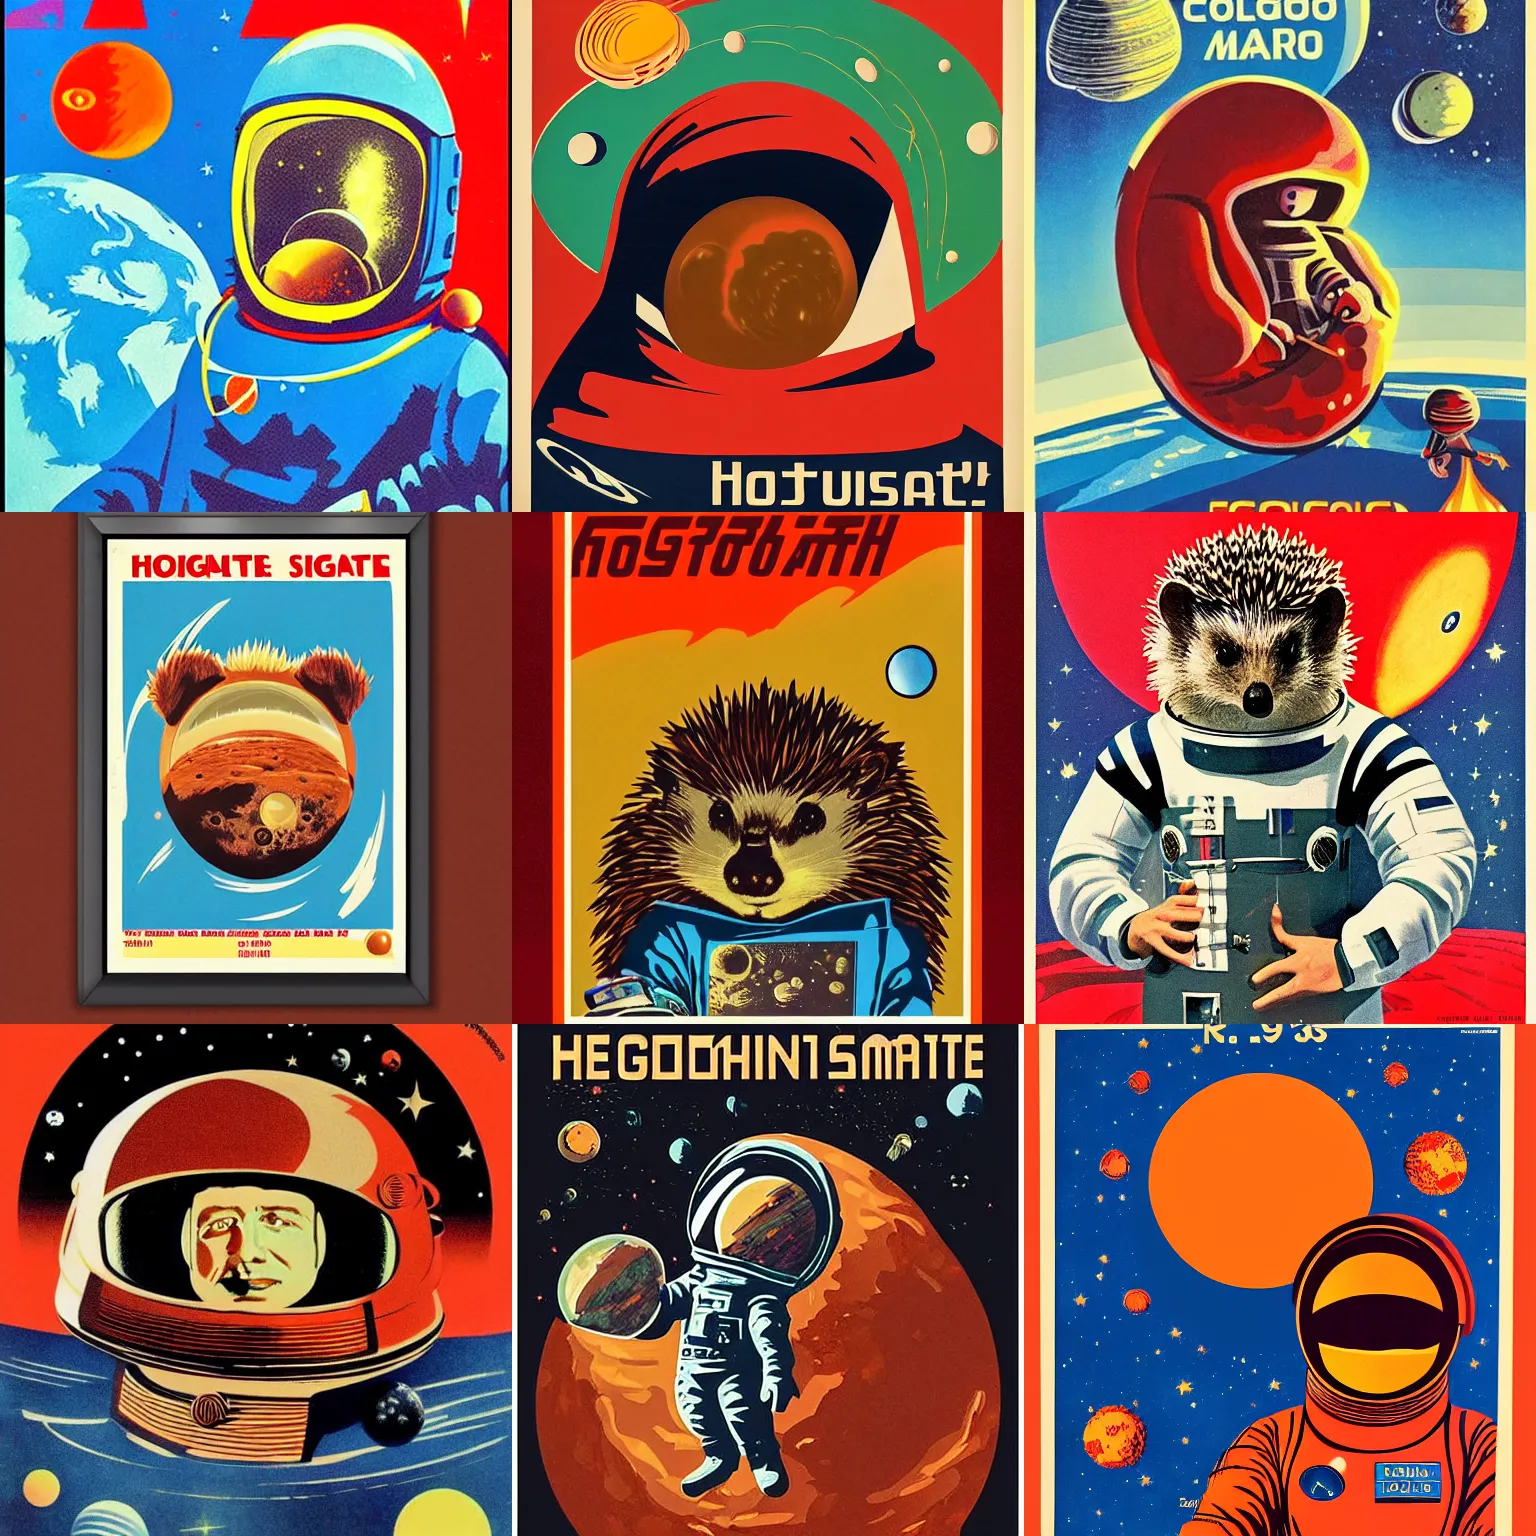 Prompt: Hedgehog cosmonaut portrait, planet mars, 60s poster, 1966 Soviet